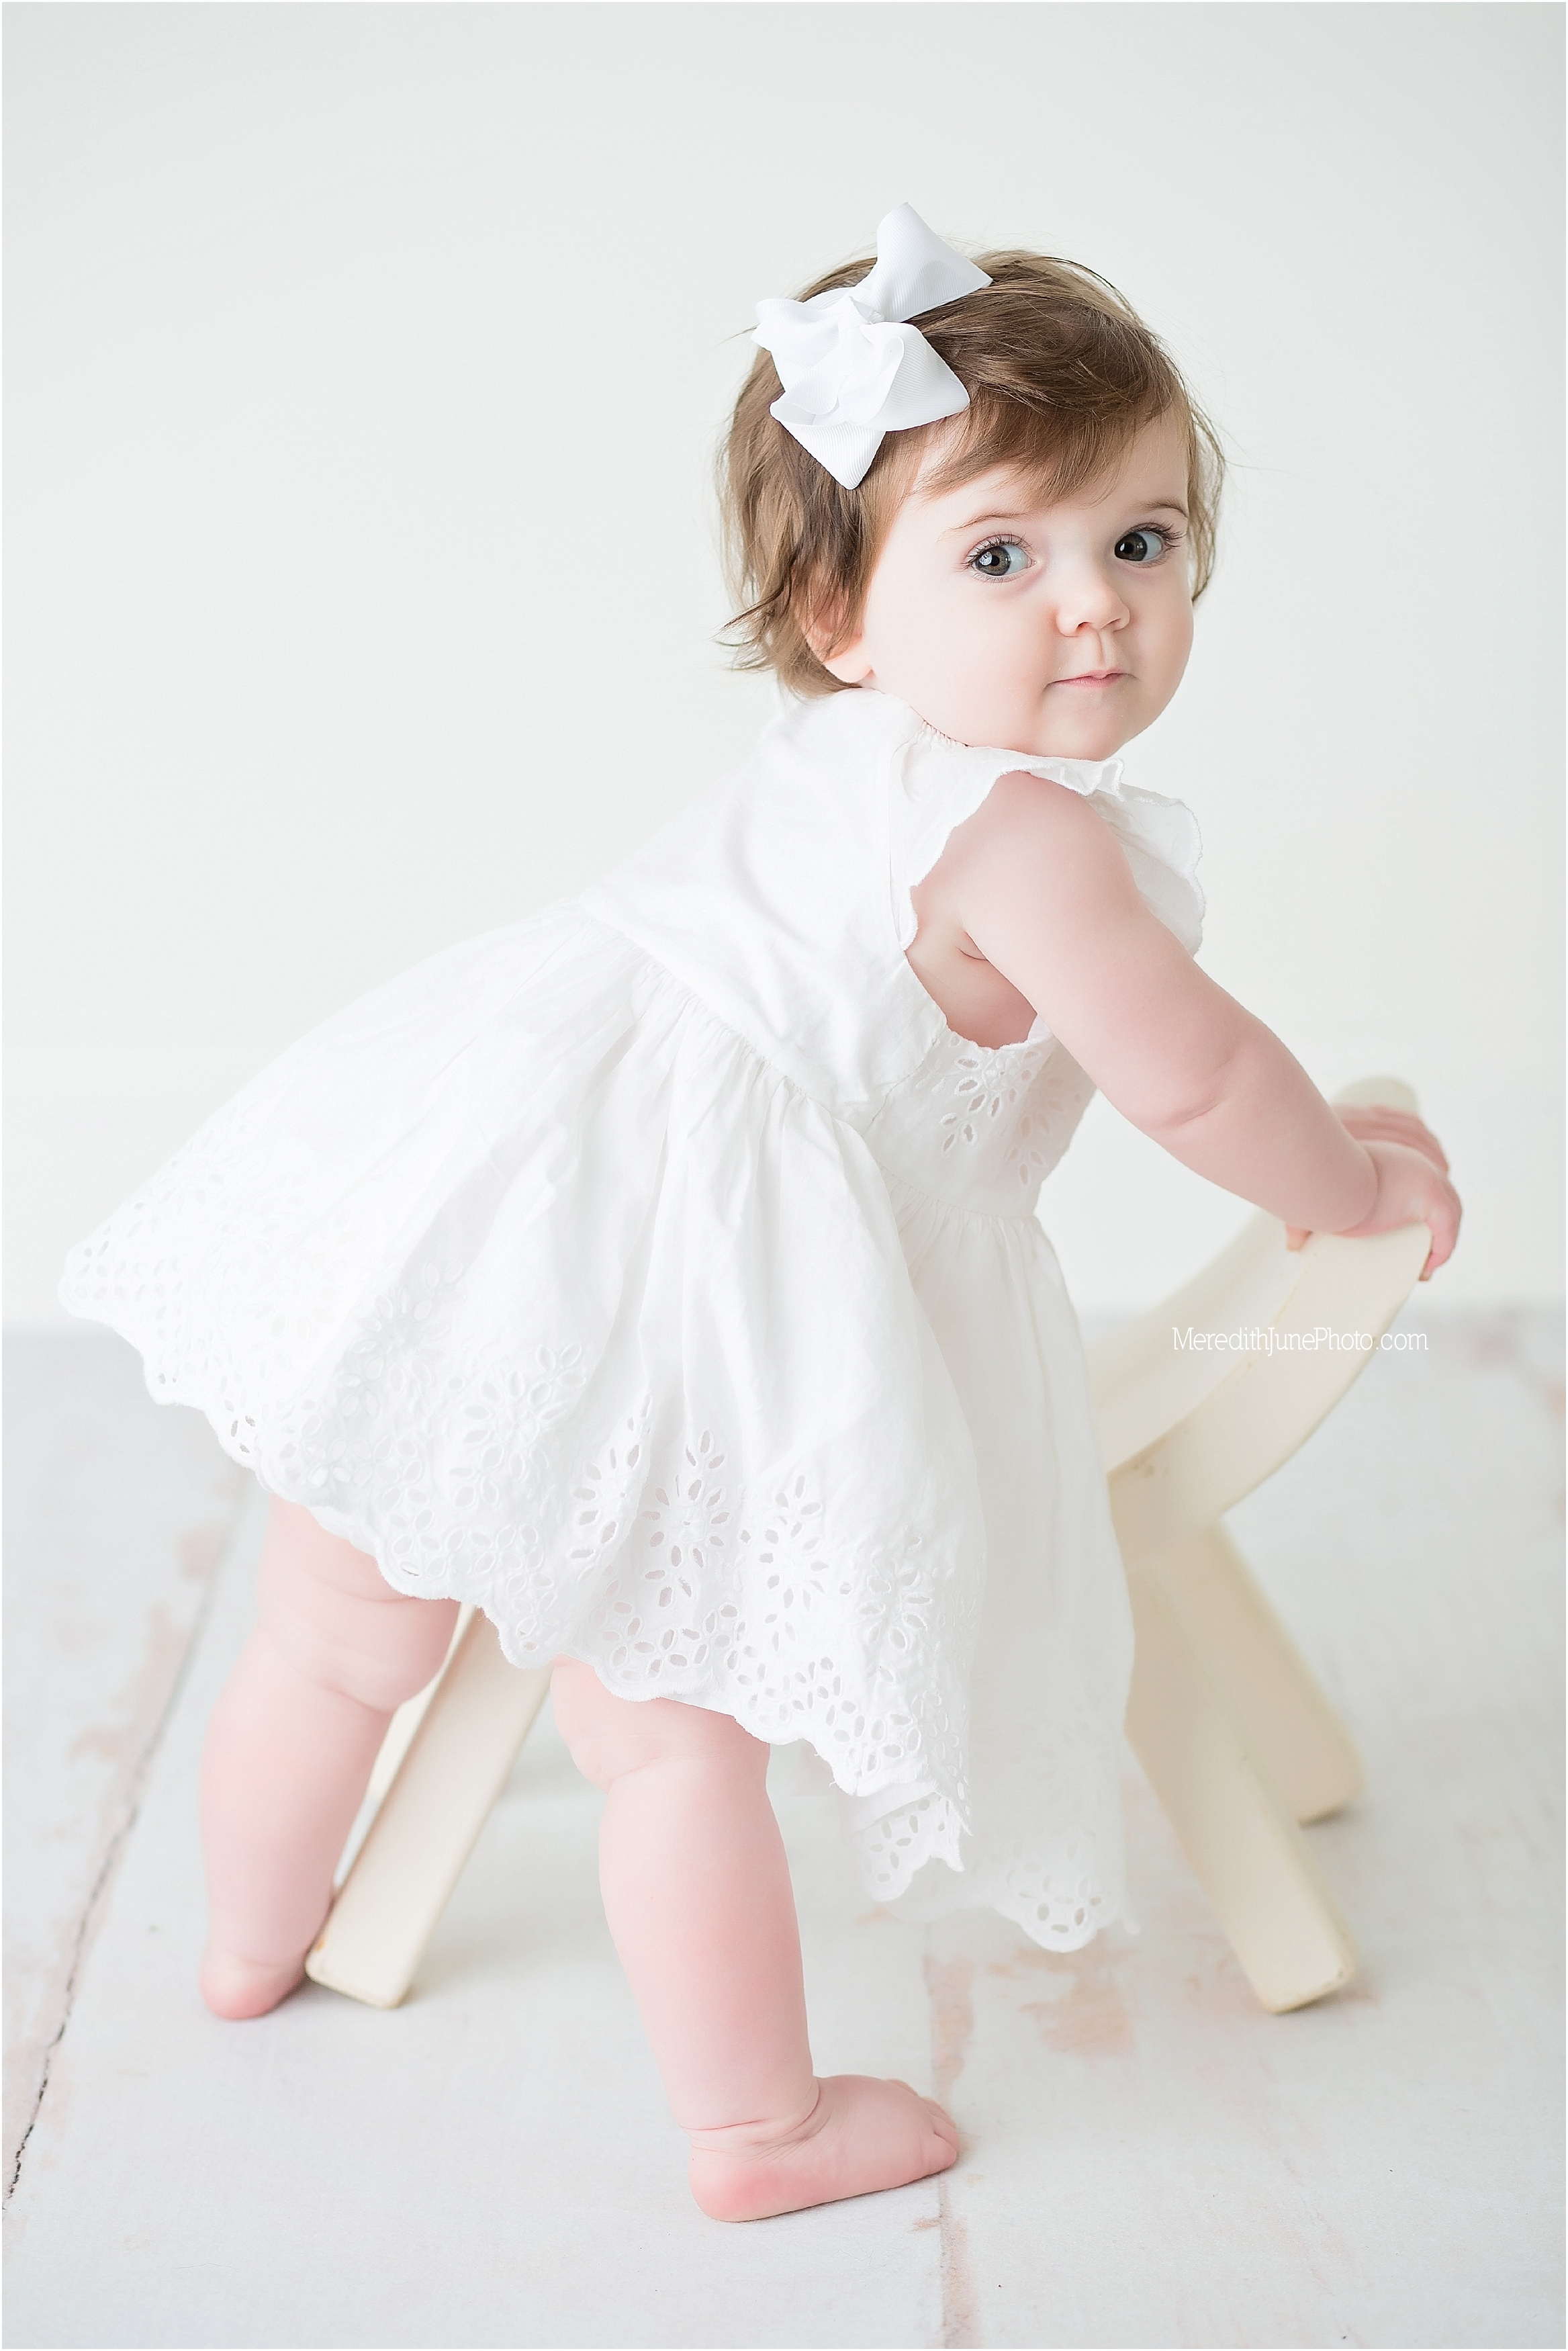 professional baby photography | charlotte newborn portraits